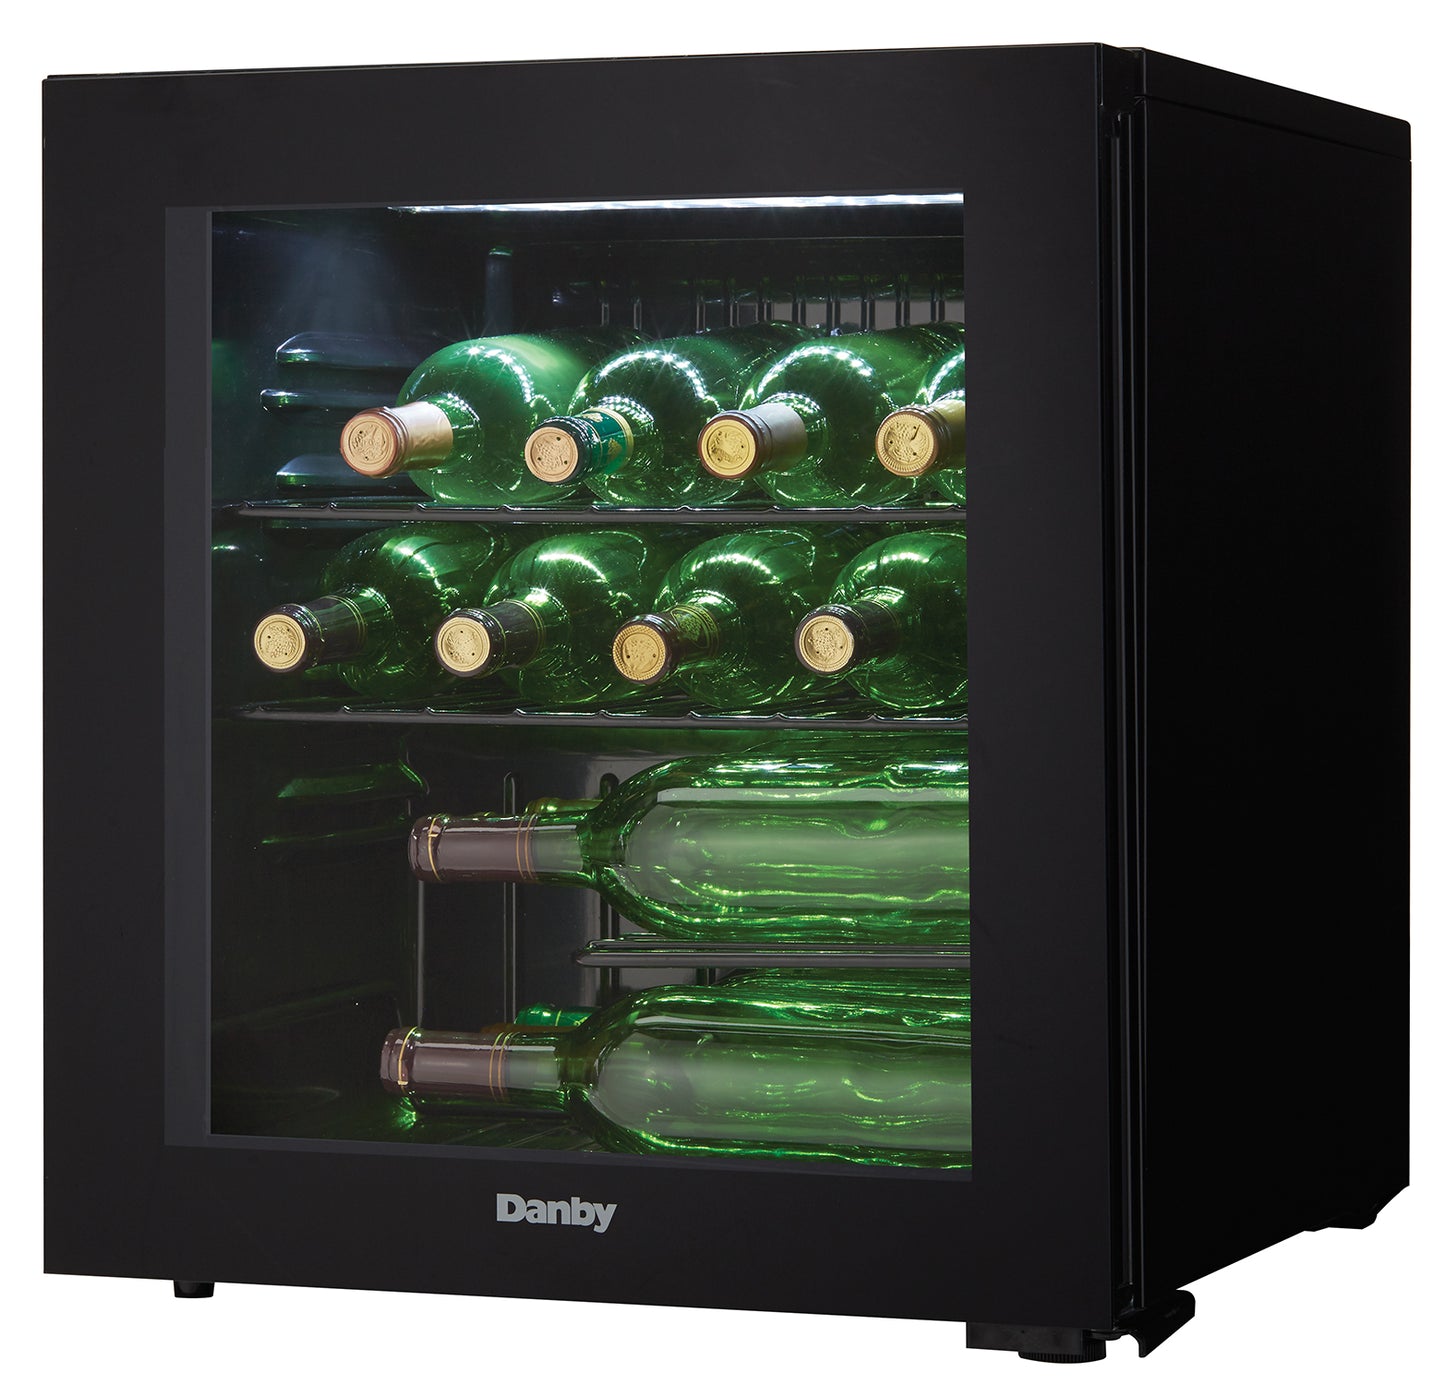 Danby 16 Bottle Free-Standing Wine Cooler in Black - DWC018A1BDB